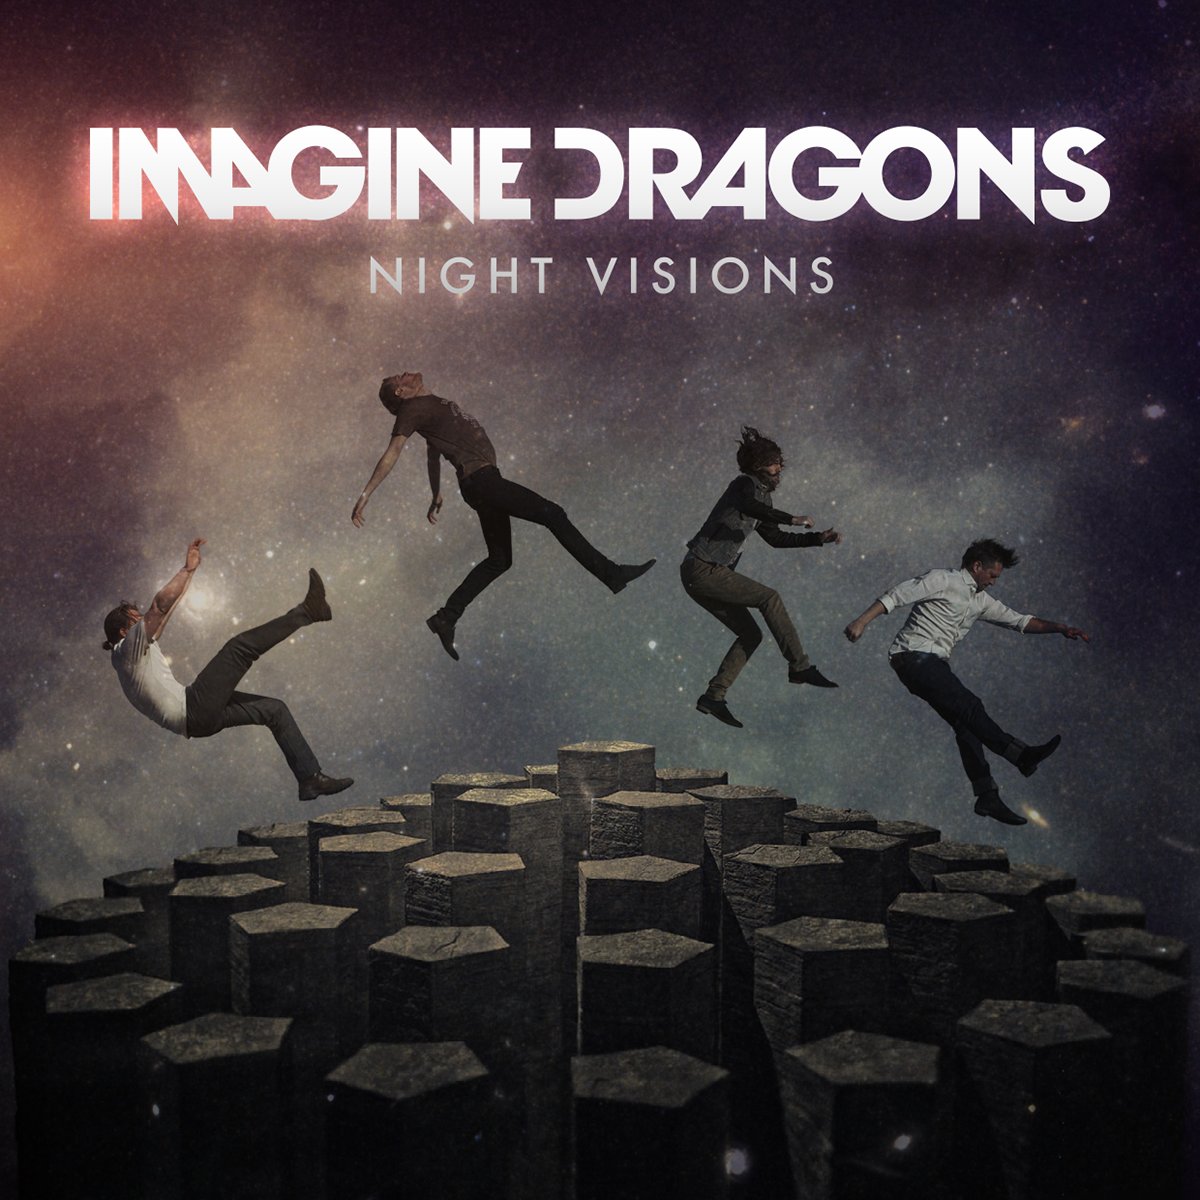 imagine dragons night visions album year